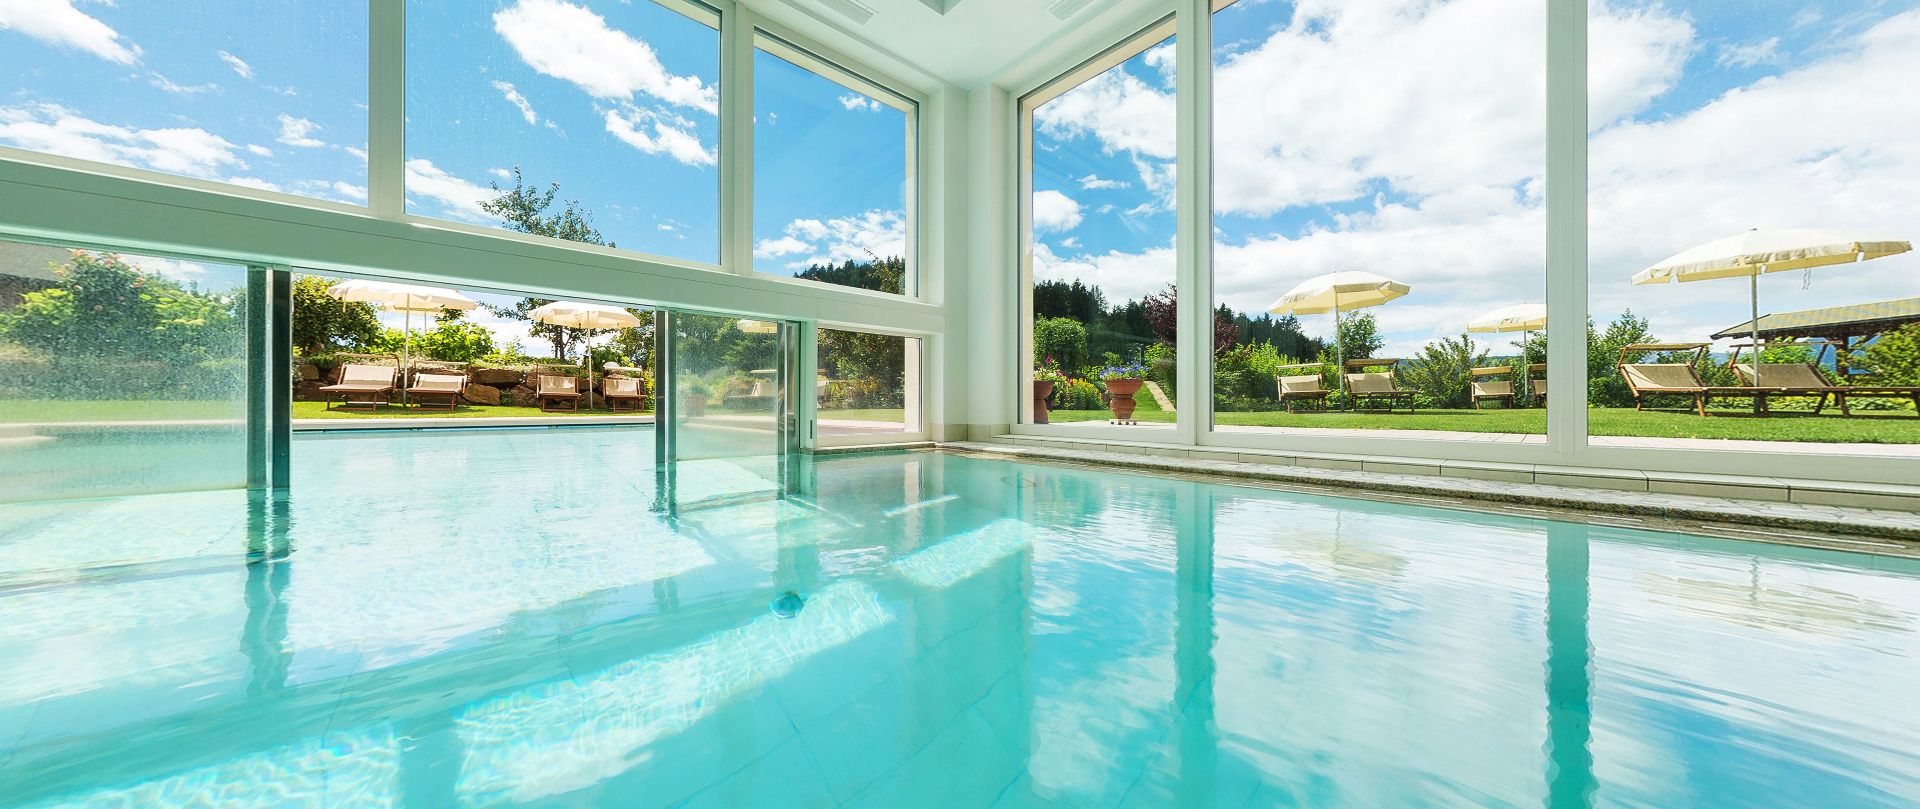 Indoor swimming pool sunbathing lawn Hotel Sulfner South Tyrol